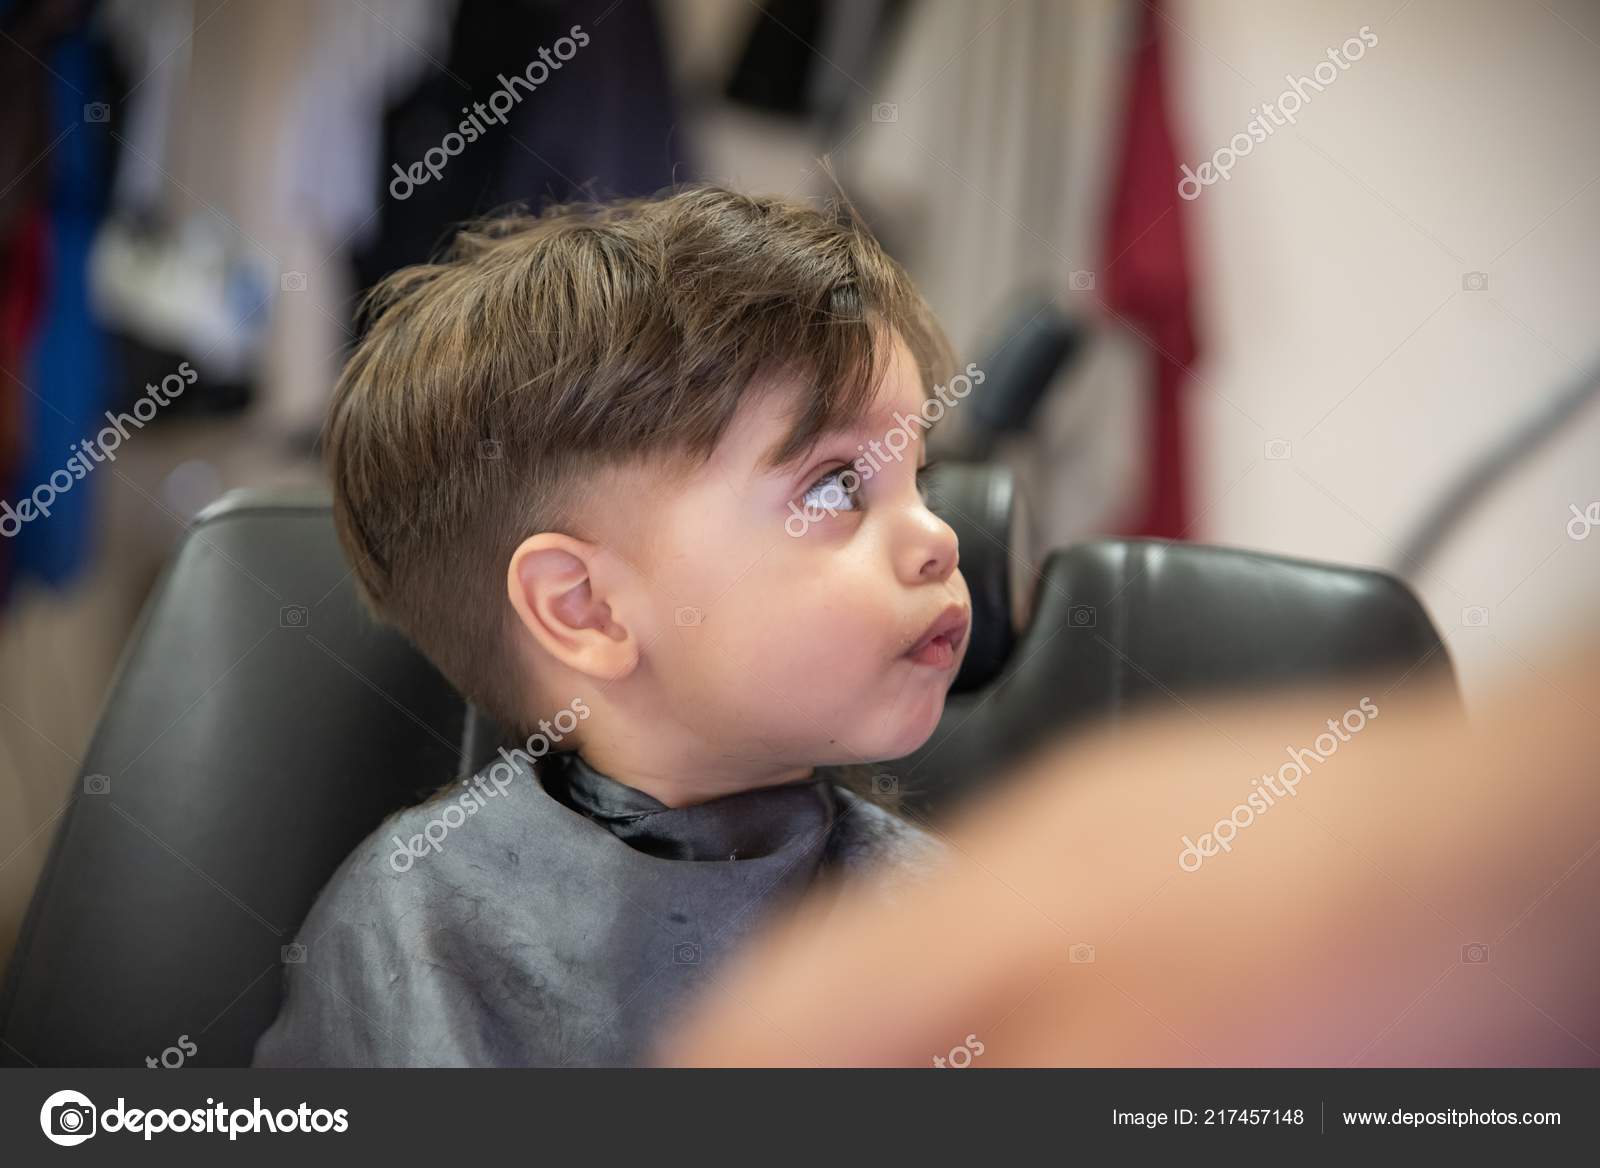 Pics Baby Hair Cutting Cute Baby Boy Toddler Cutting Hair Stock Photo C Mateusdre 217457148